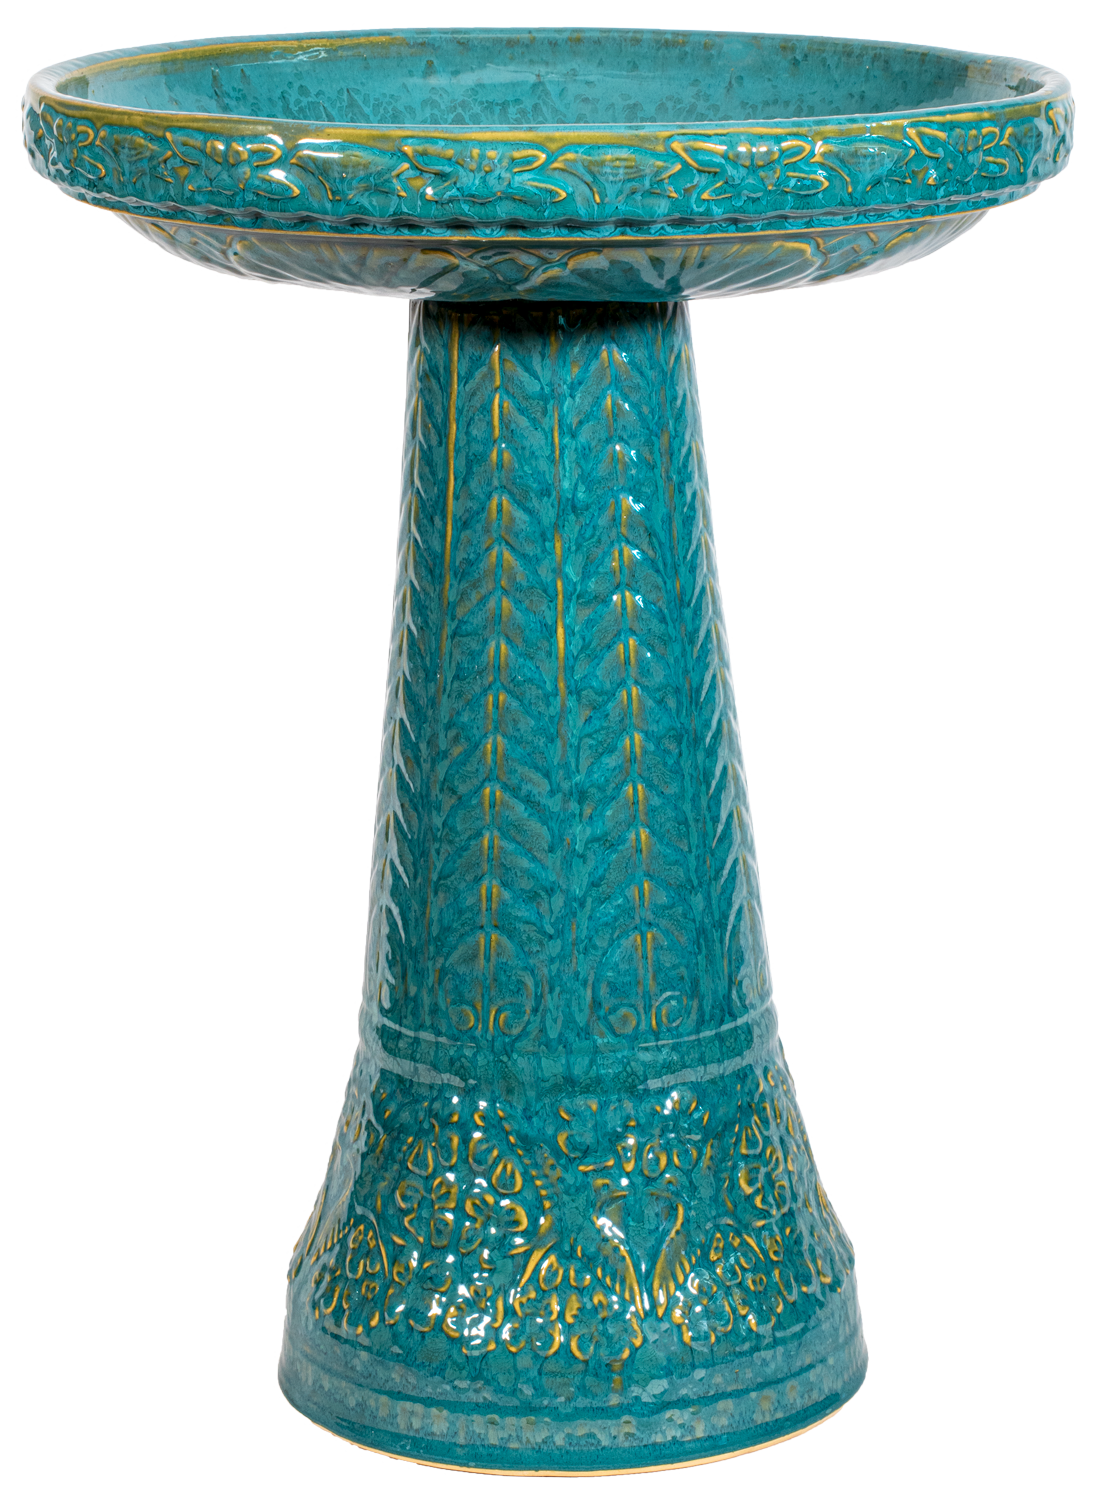 ceramic Turquoise birdbath set with birds flowers and a chevron design